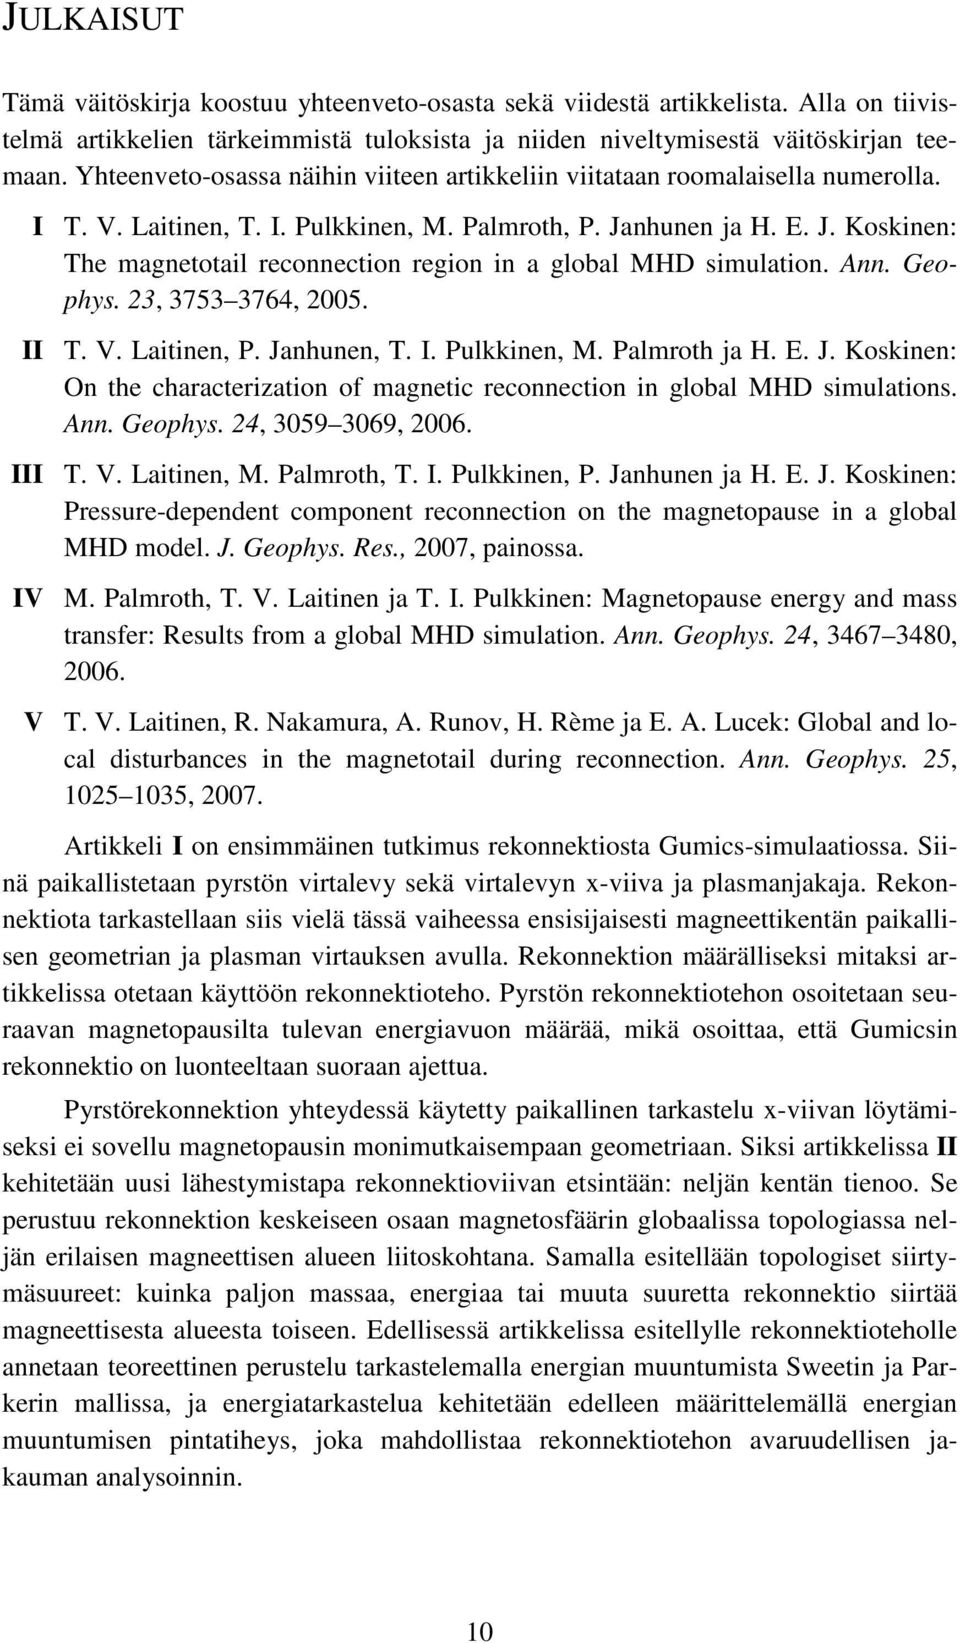 nhunen ja H. E. J. Koskinen: The magnetotail reconnection region in a global MHD simulation. Ann. Geophys. 23, 3753 3764, 2005. II T. V. Laitinen, P. Janhunen, T. I. Pulkkinen, M. Palmroth ja H. E. J. Koskinen: On the characterization of magnetic reconnection in global MHD simulations.